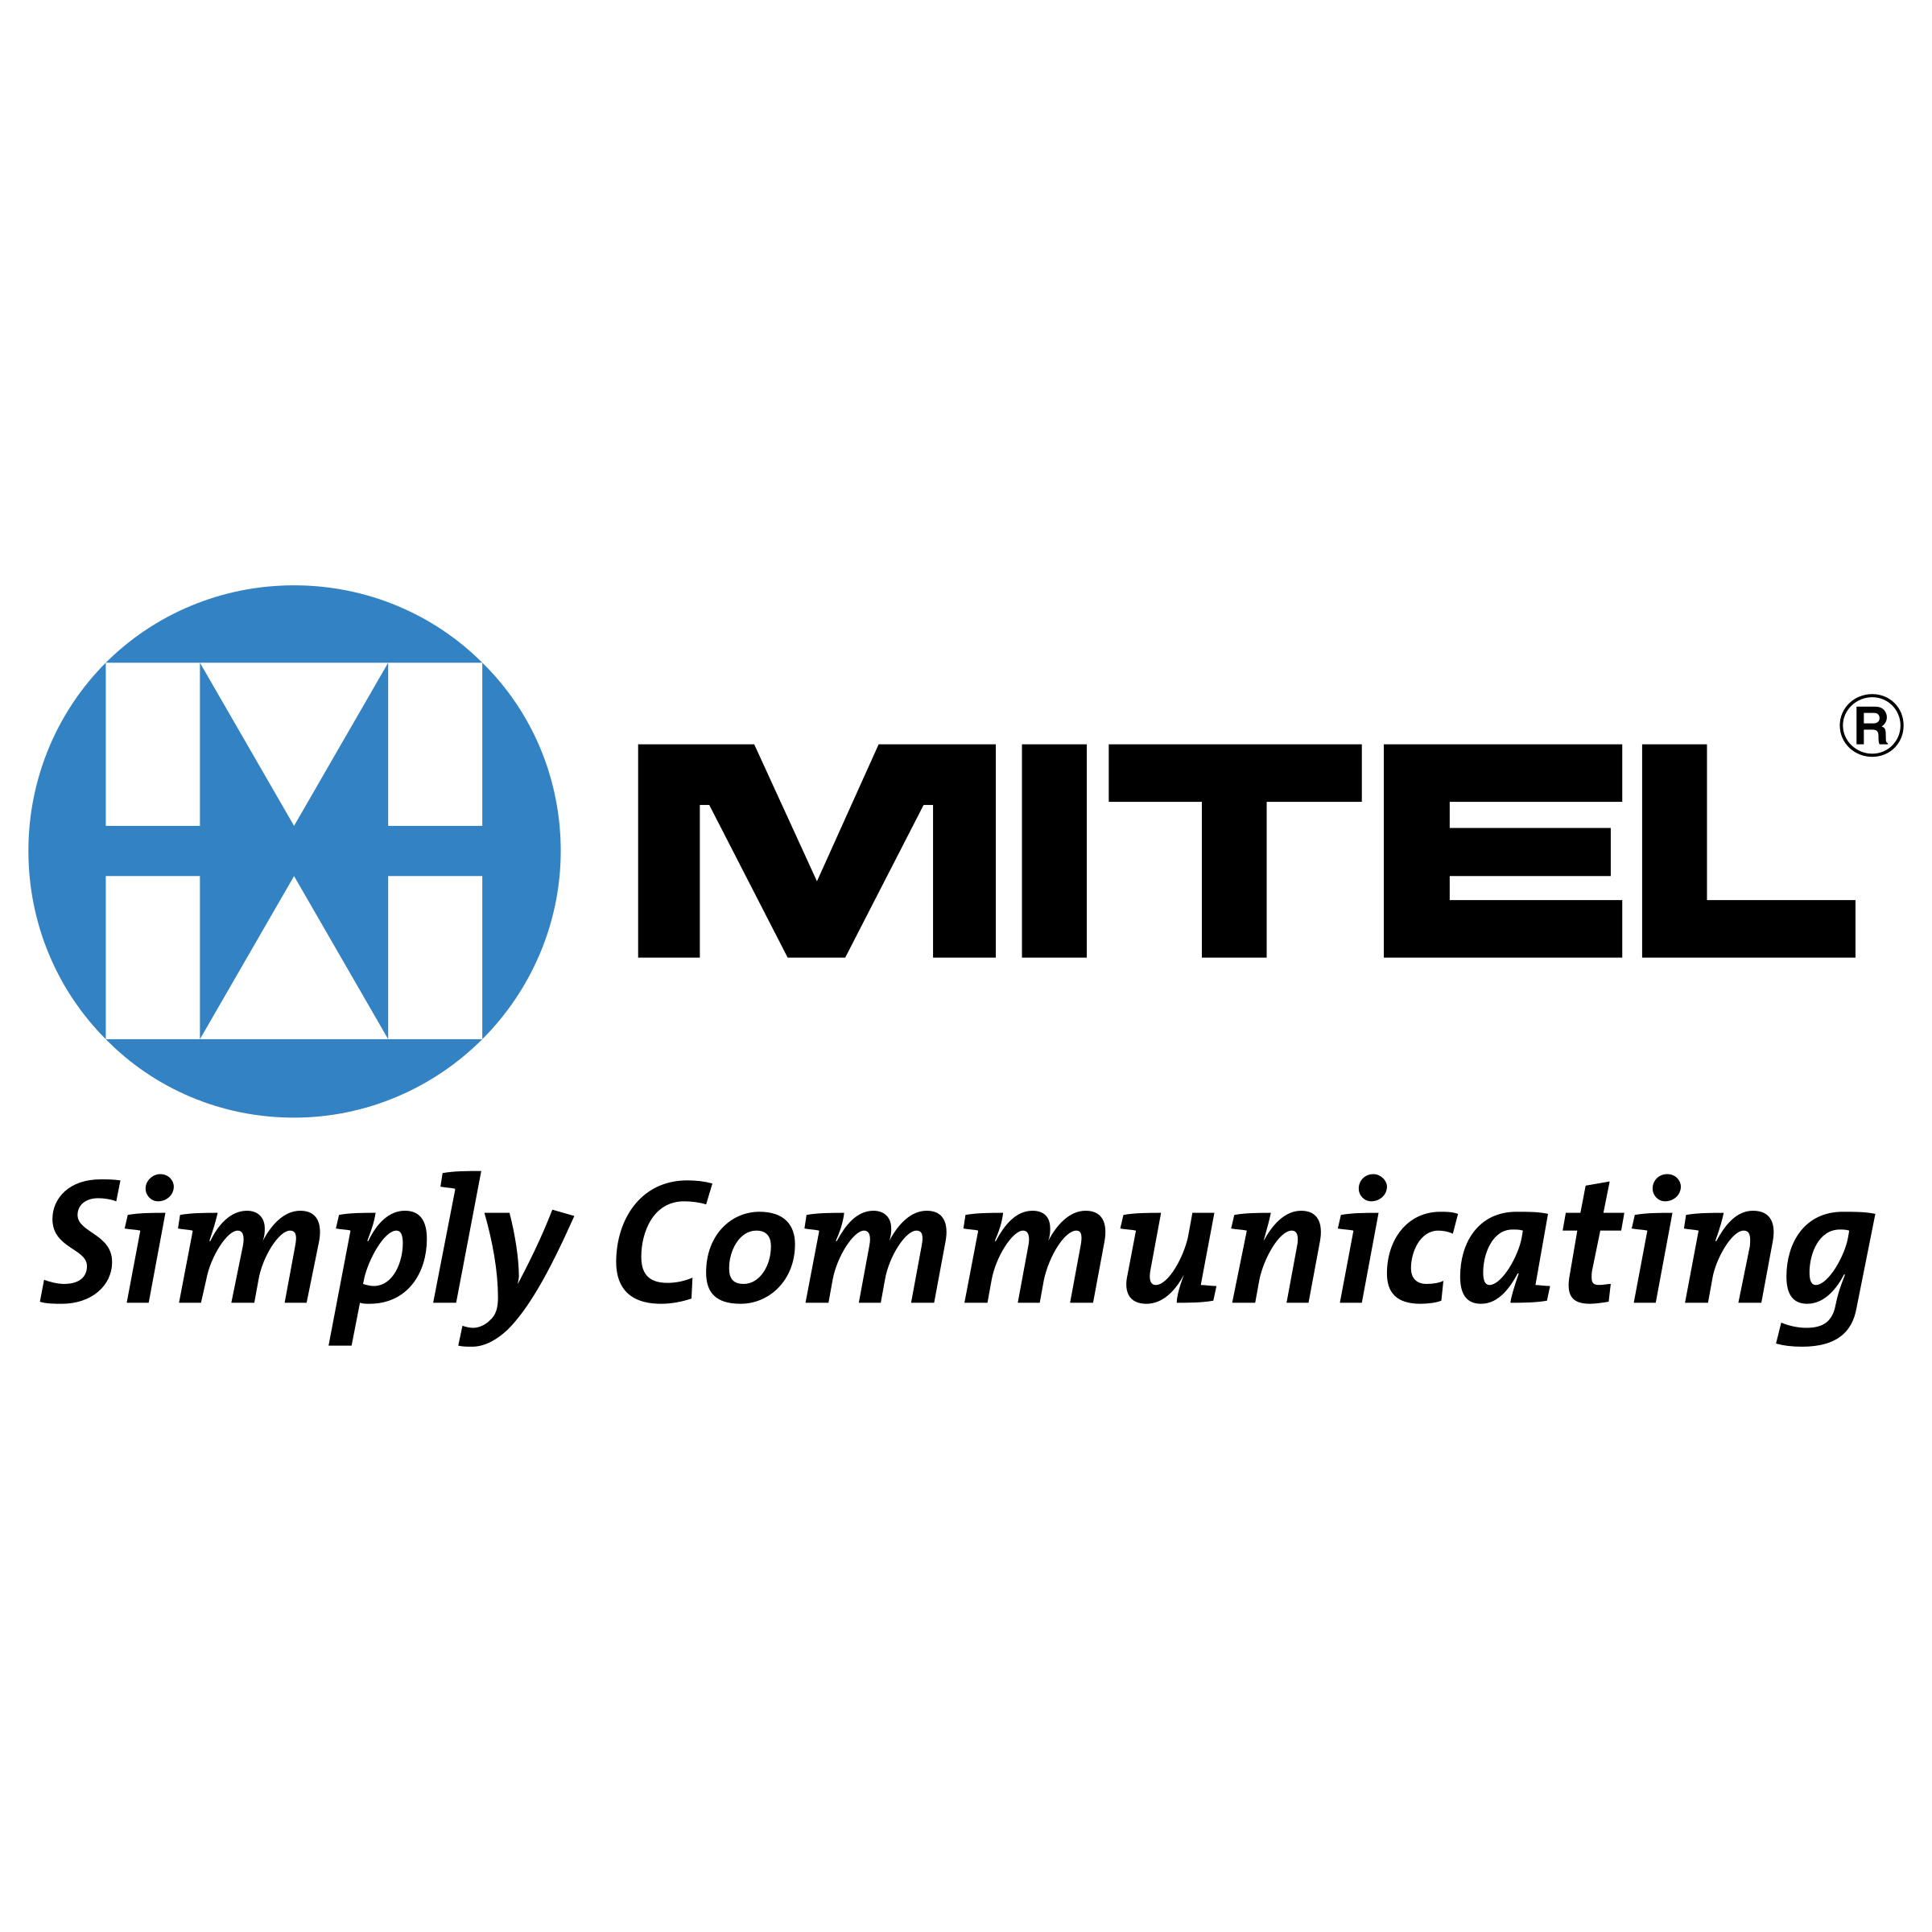 New Mitel Logo - Mitel Logo PNG Transparent & SVG Vector - Freebie Supply